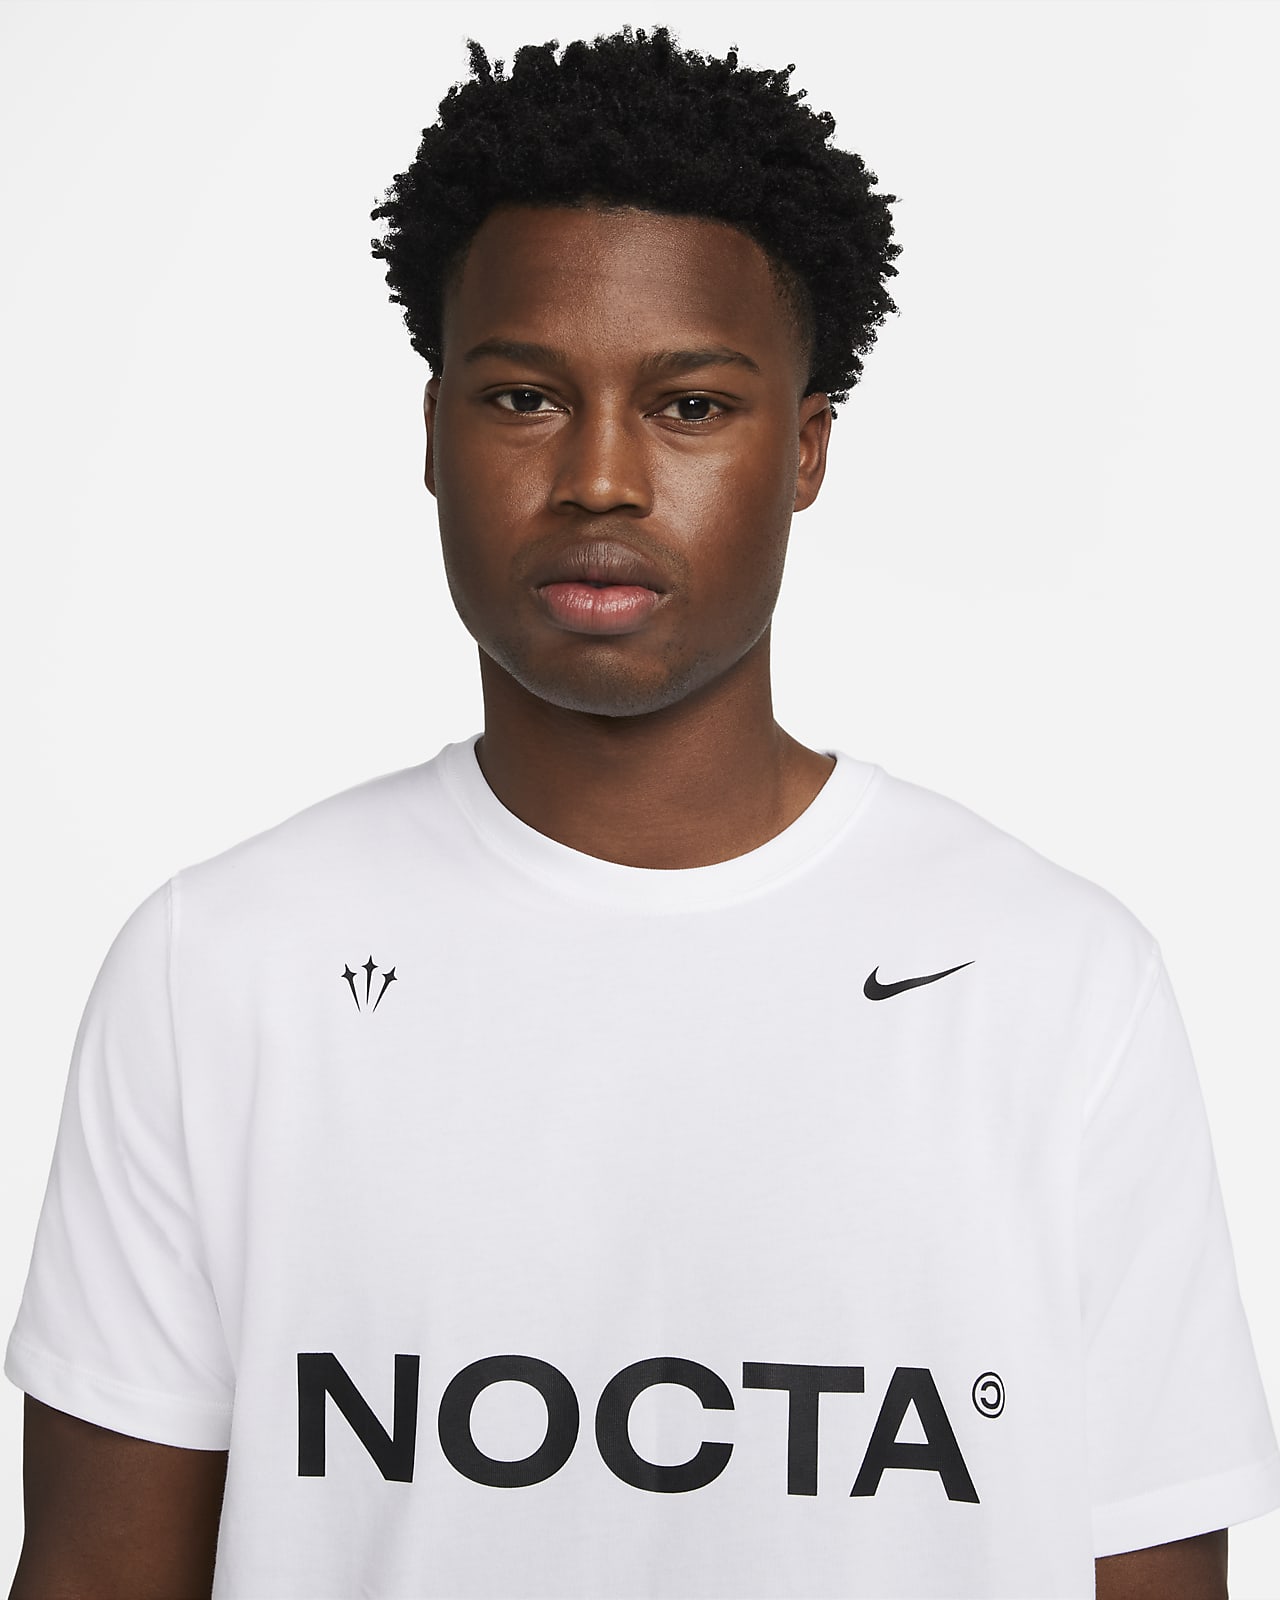 NOCTA Men's Short-Sleeve Basketball Top. Nike CH